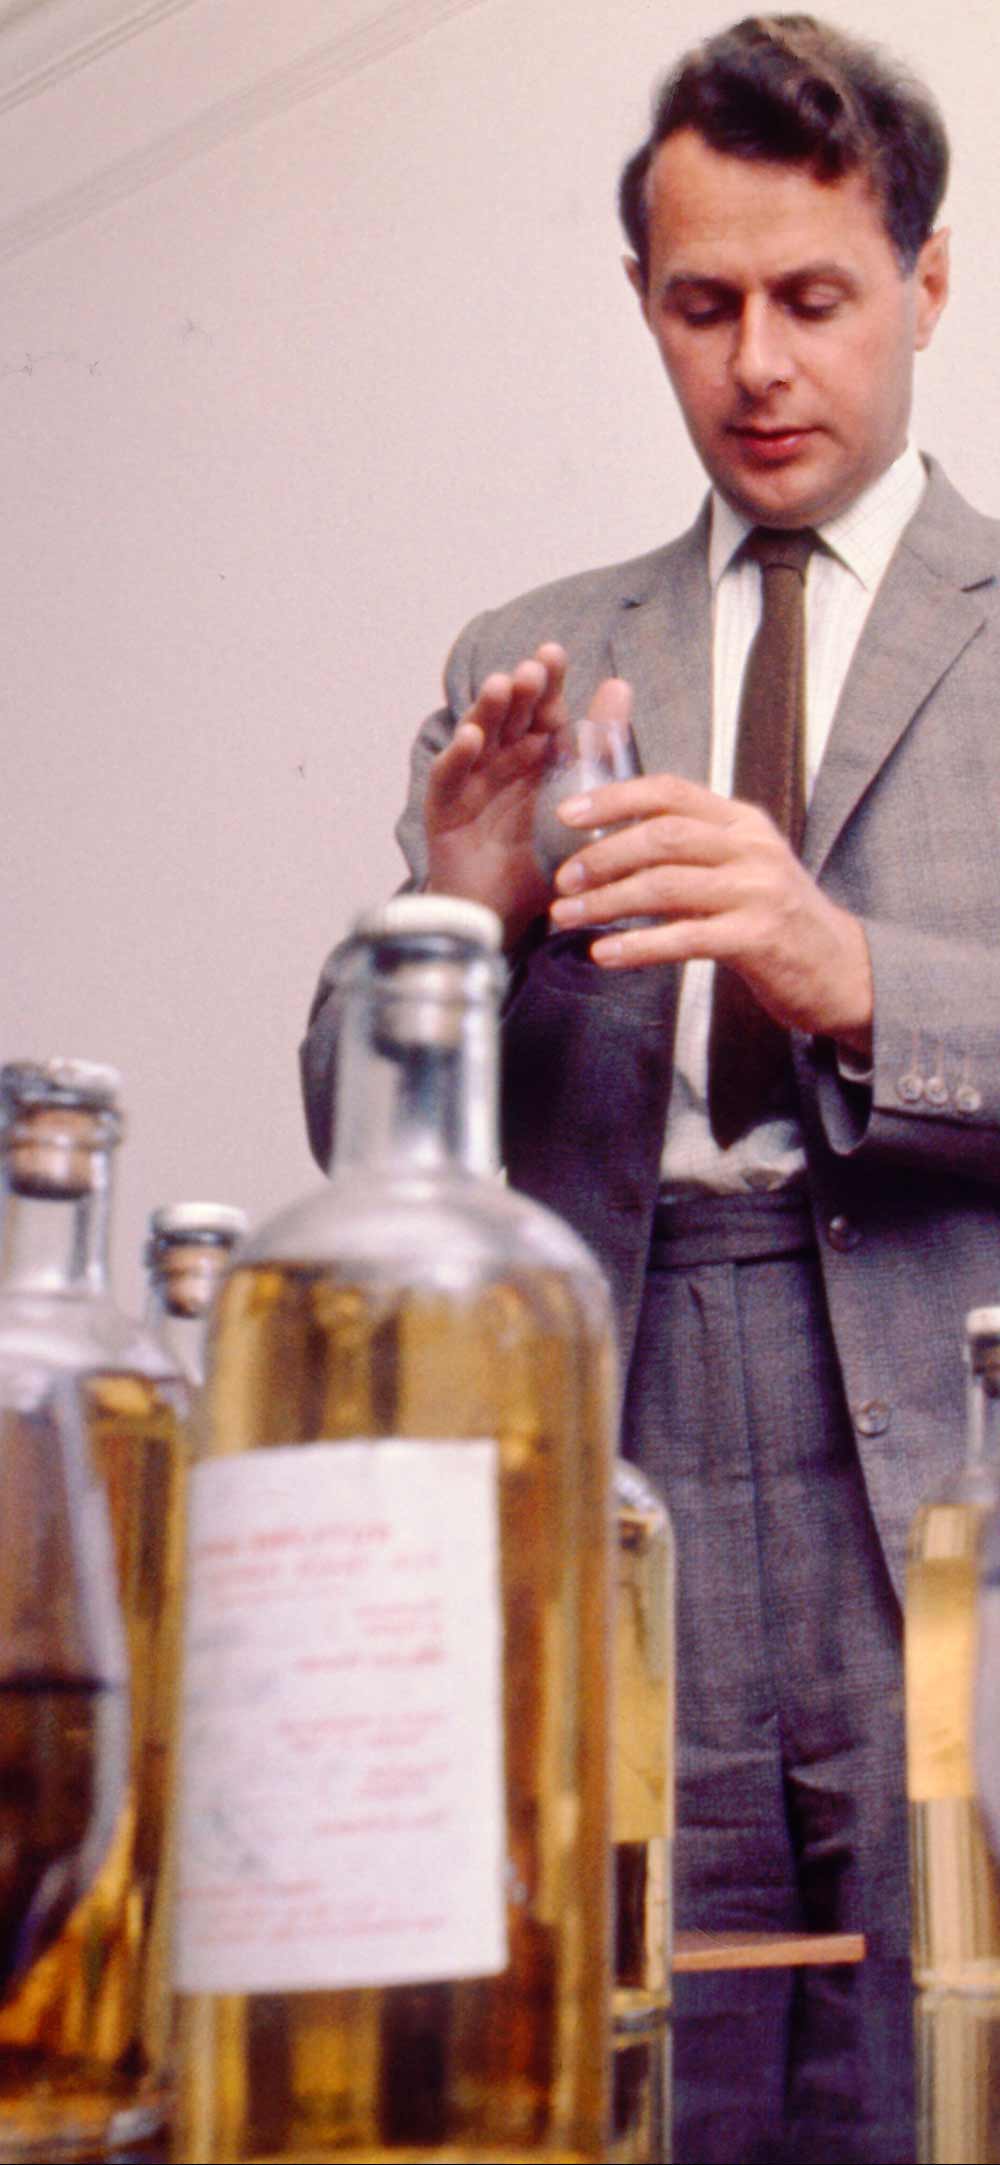 Whisky tasting with multiple Glenfiddich bottles